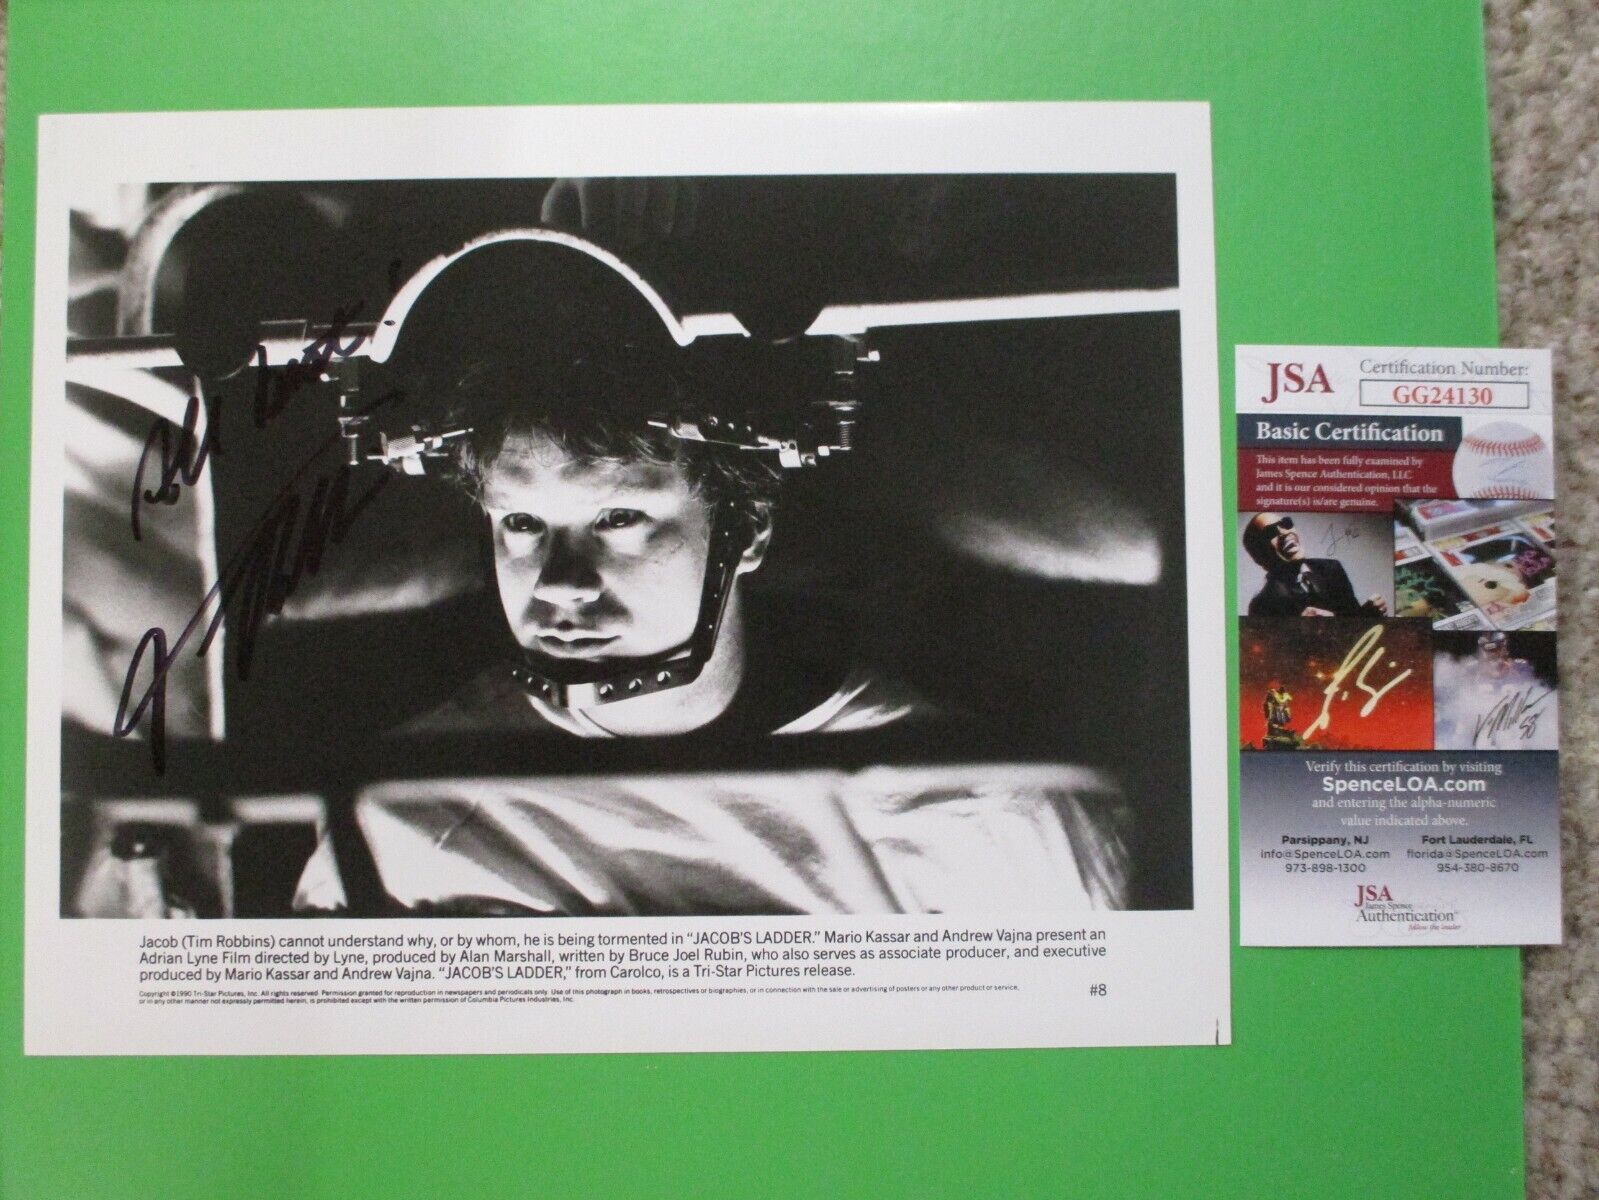 Tim Robbins Jacobs Ladder Jacob Singer Signed Autographed 8x10 B&W Photo JSA